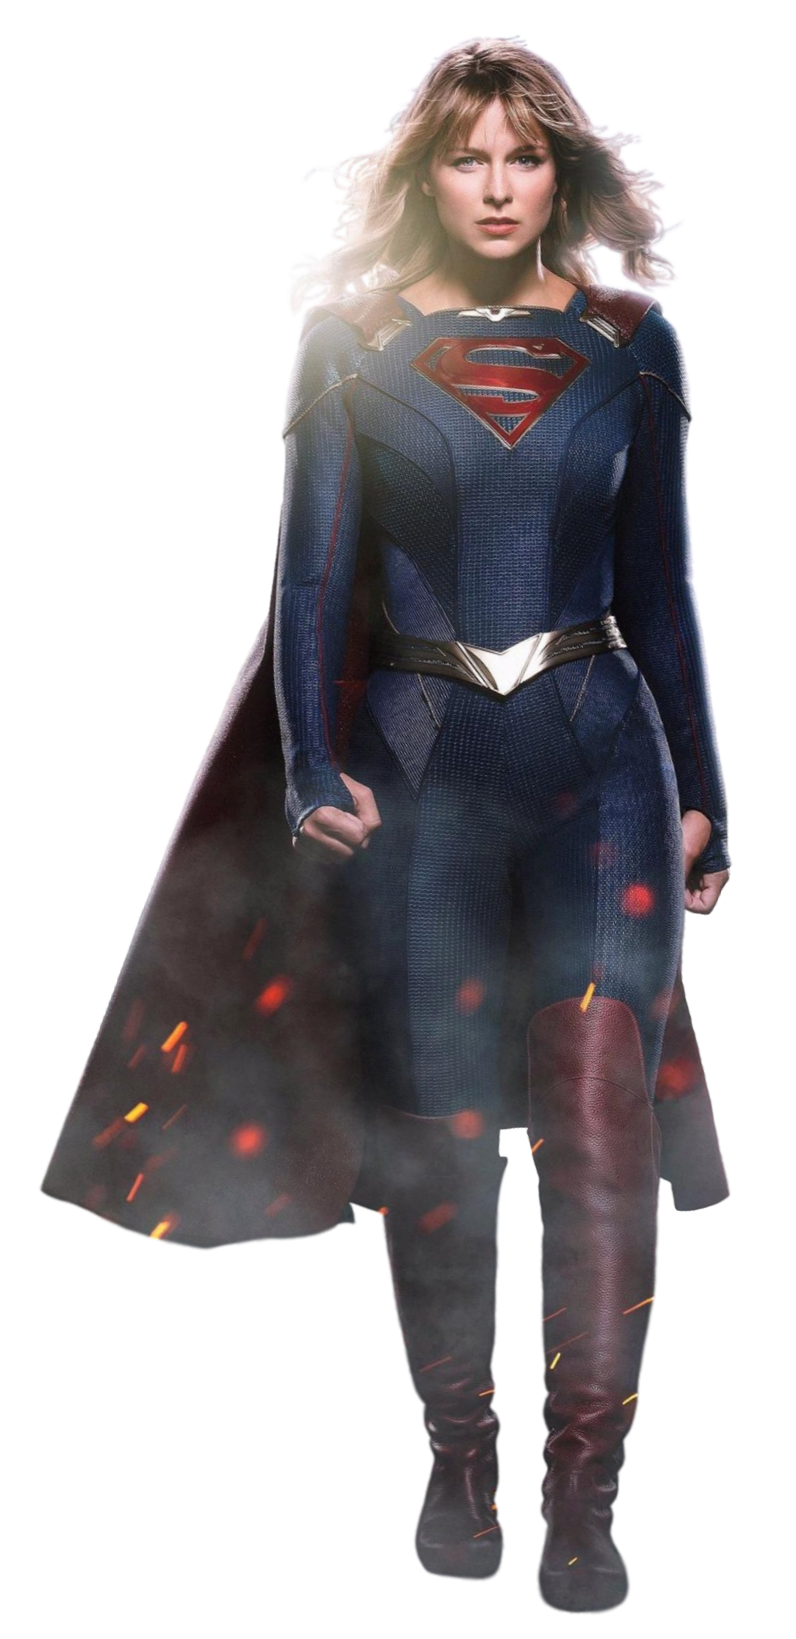 Supergirl - Wikipedia